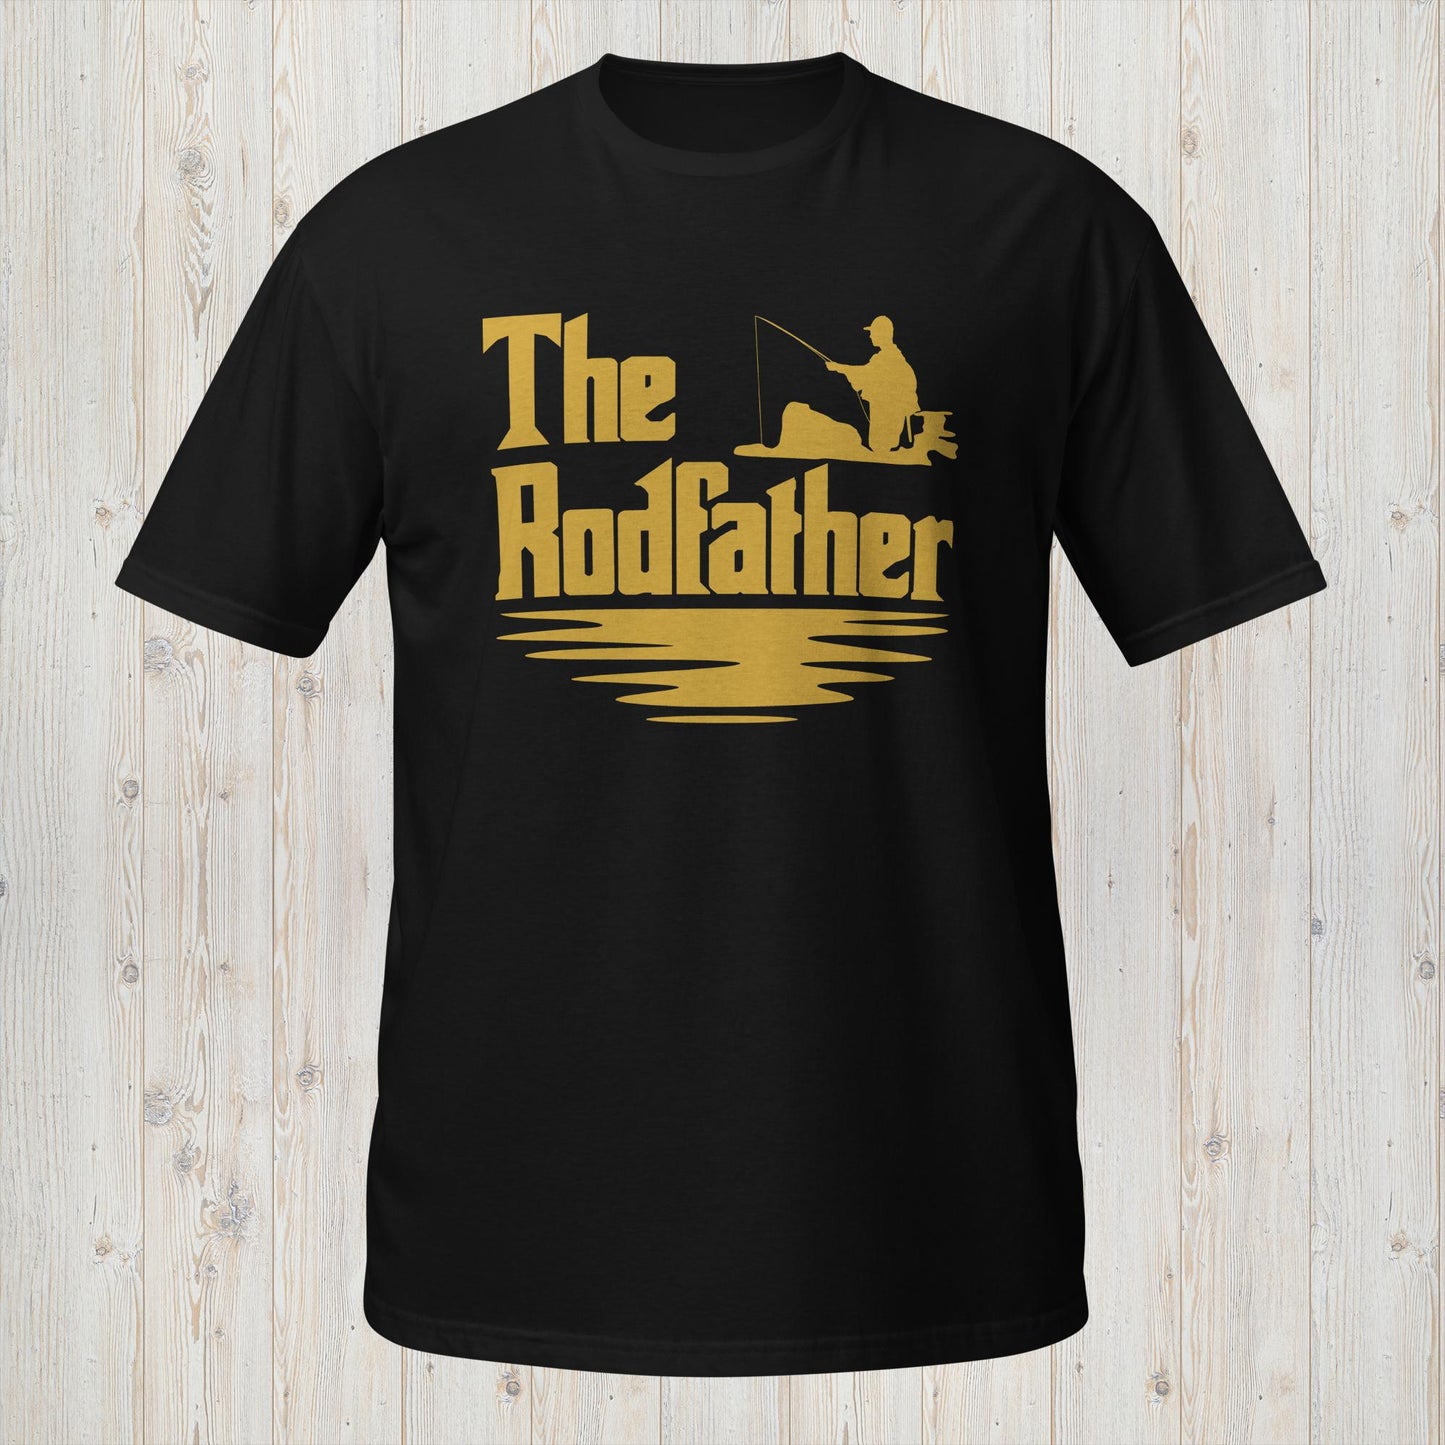 The Rodfather Tee - Fishing Enthusiast Shirt with Mafia Flair